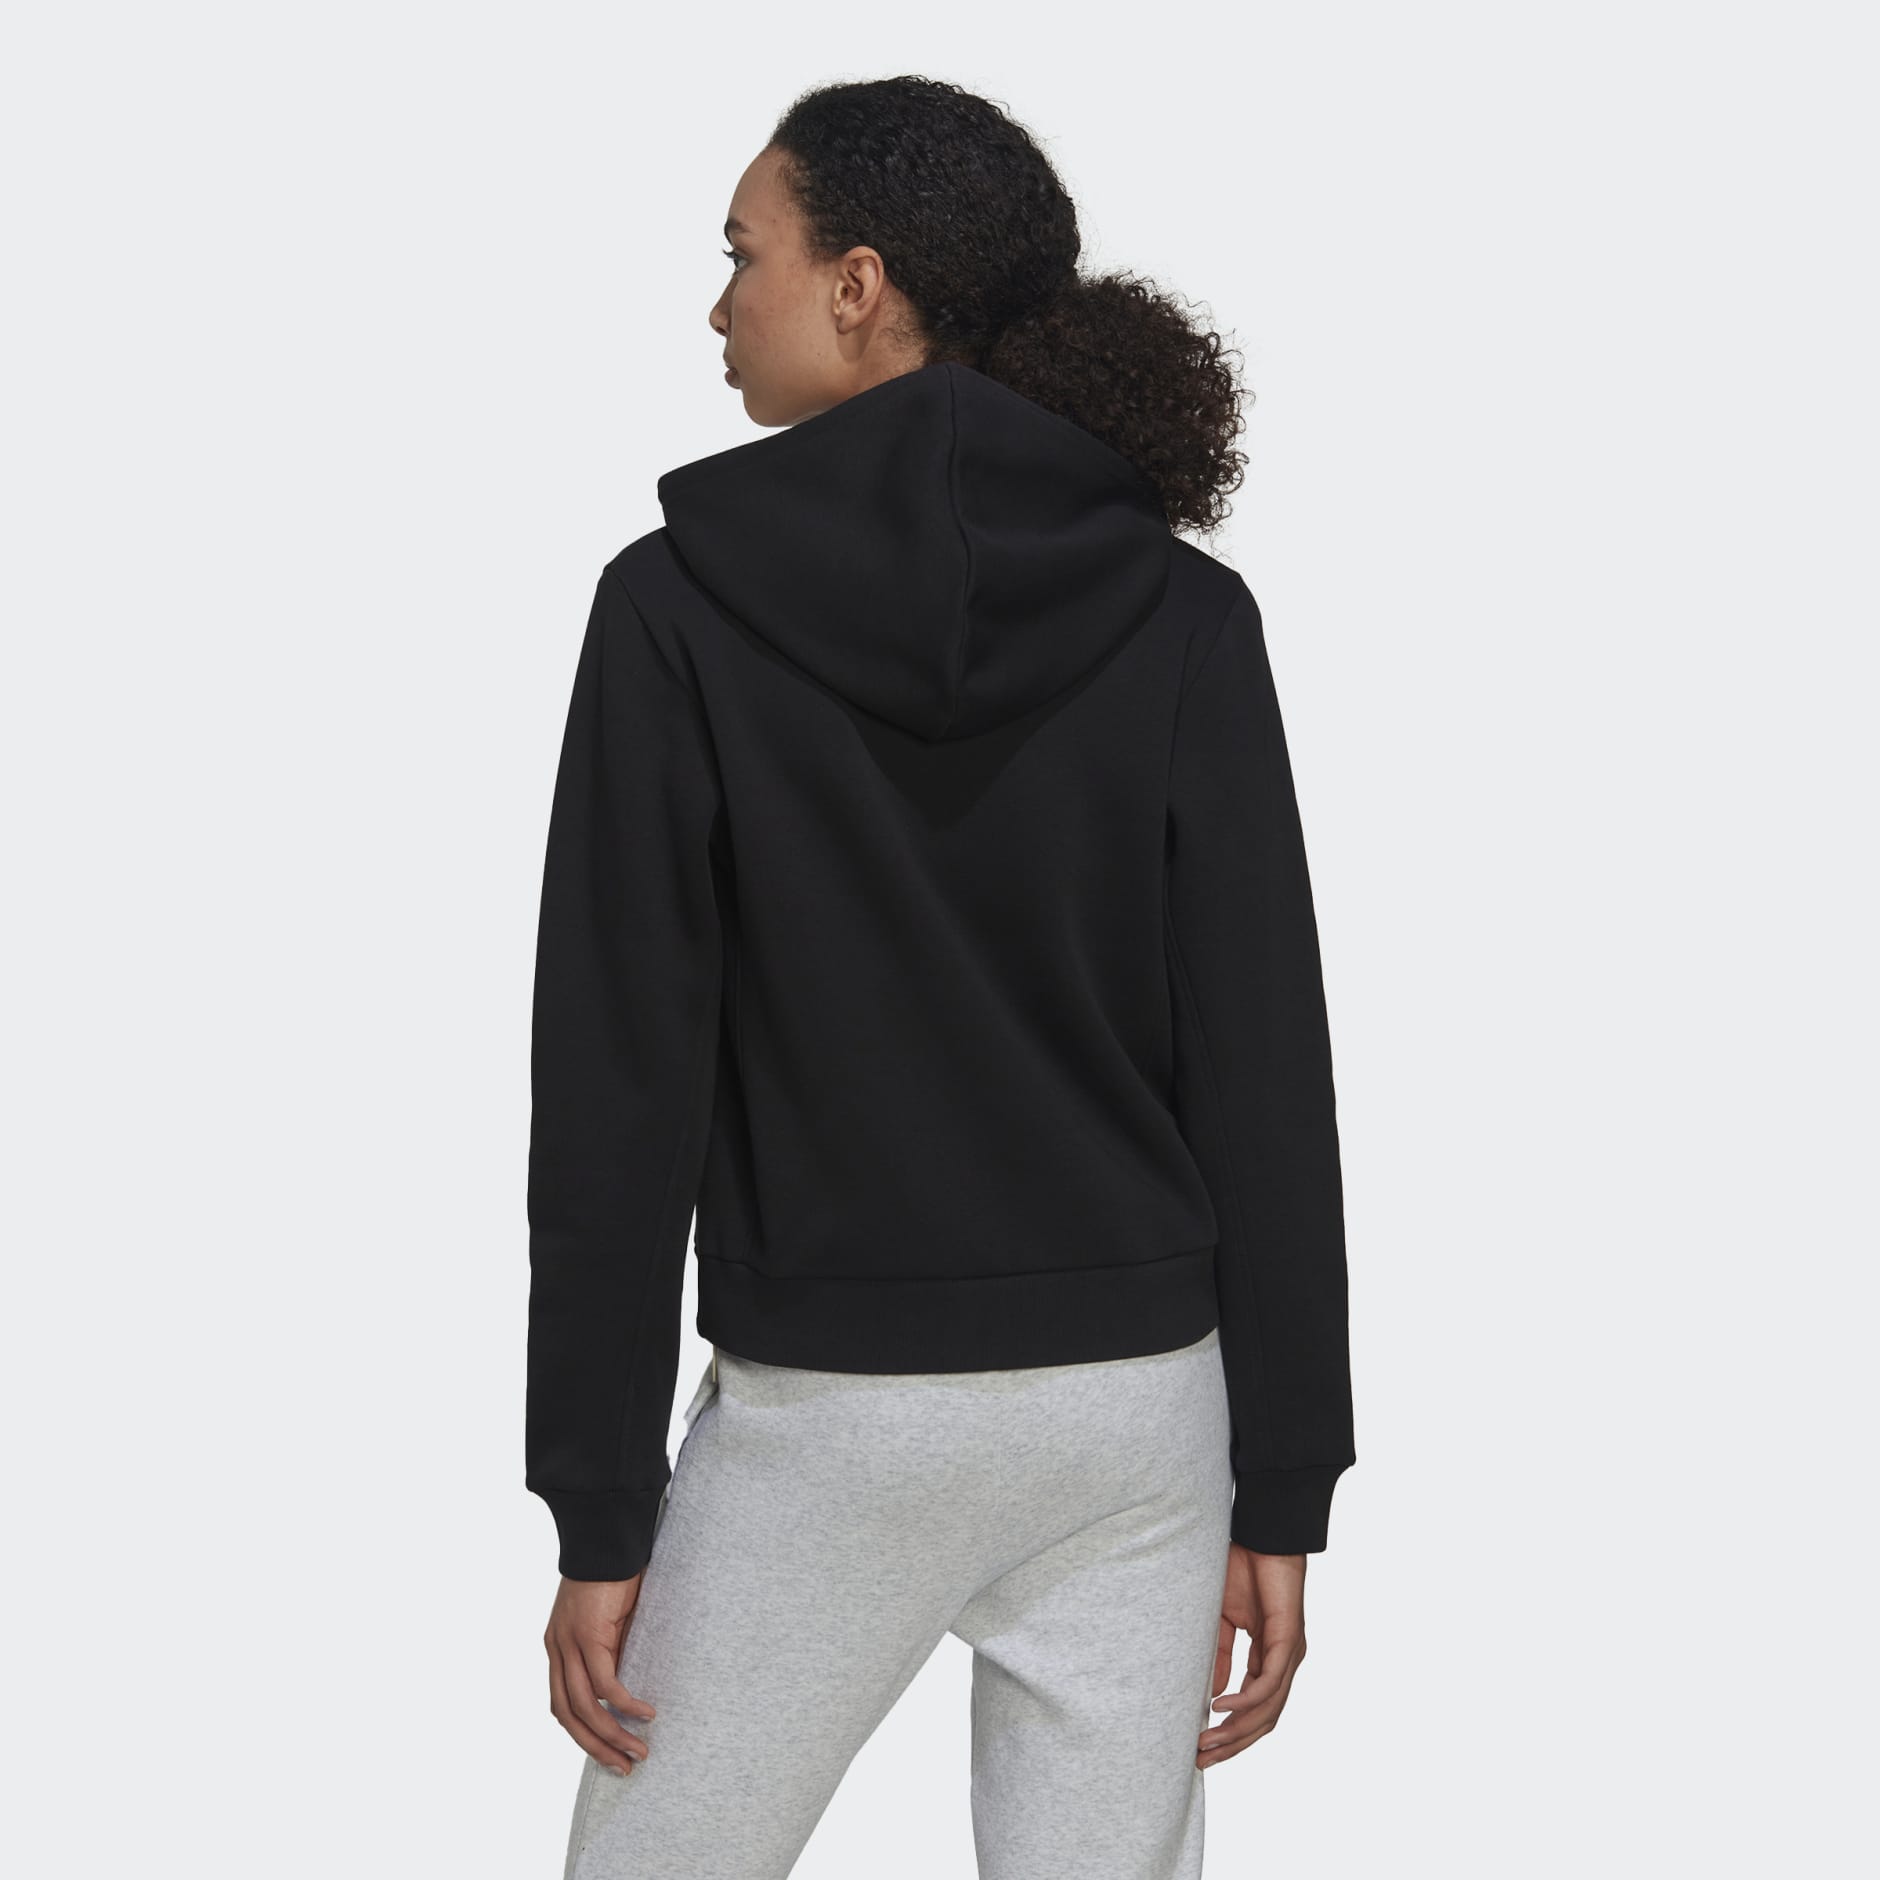 ALL Hoodie Black Fleece | SZN - Israel Full-Zip - Clothing adidas